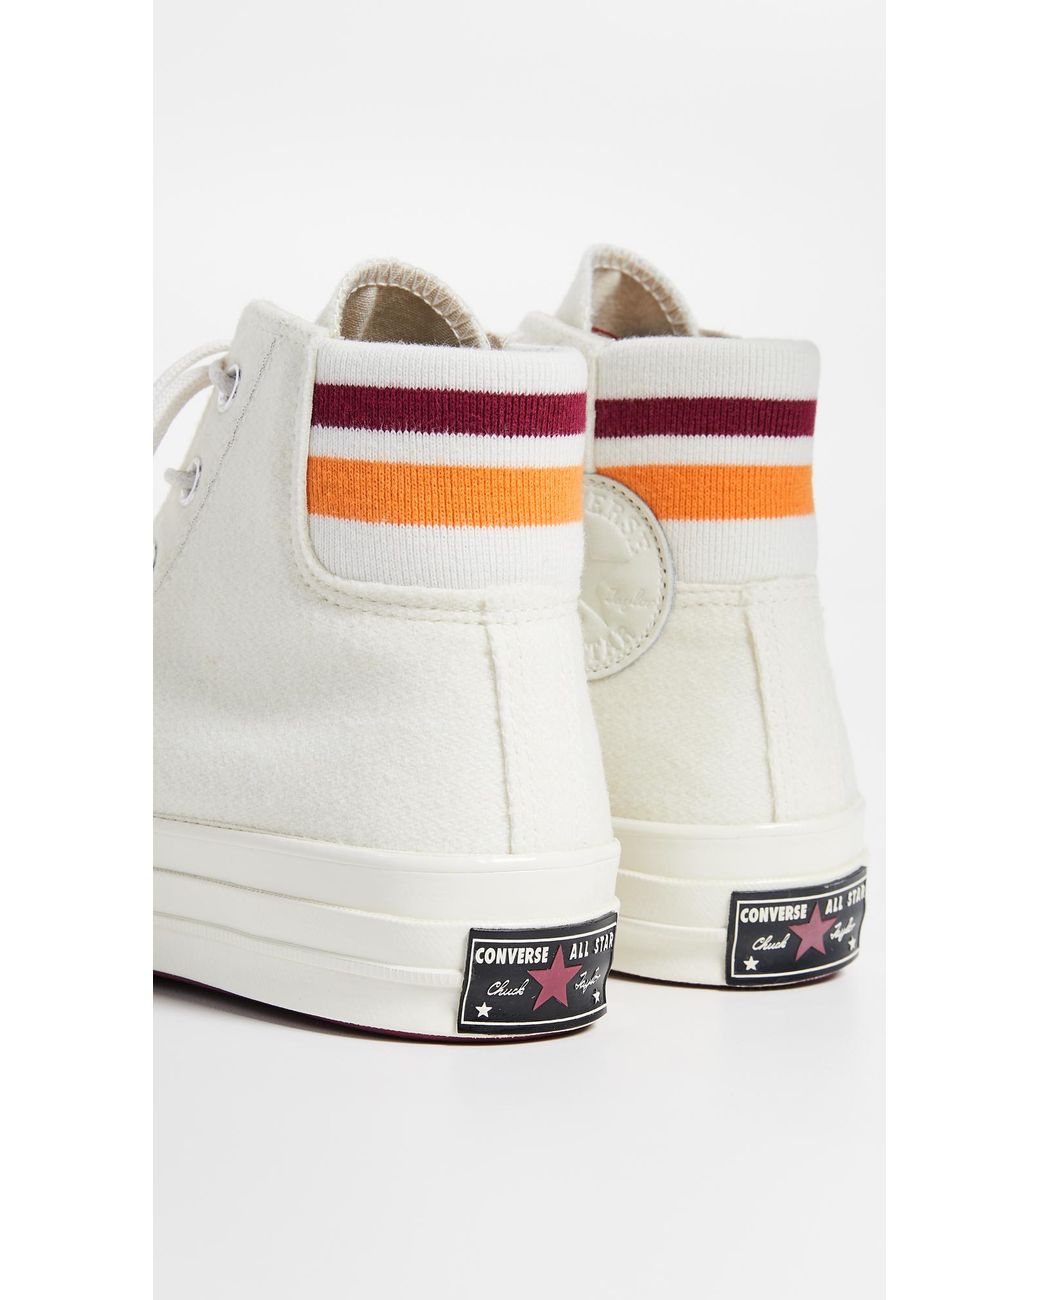 Converse Felt Chuck 70 Retro Stripe High Top Sneakers in White | Lyst